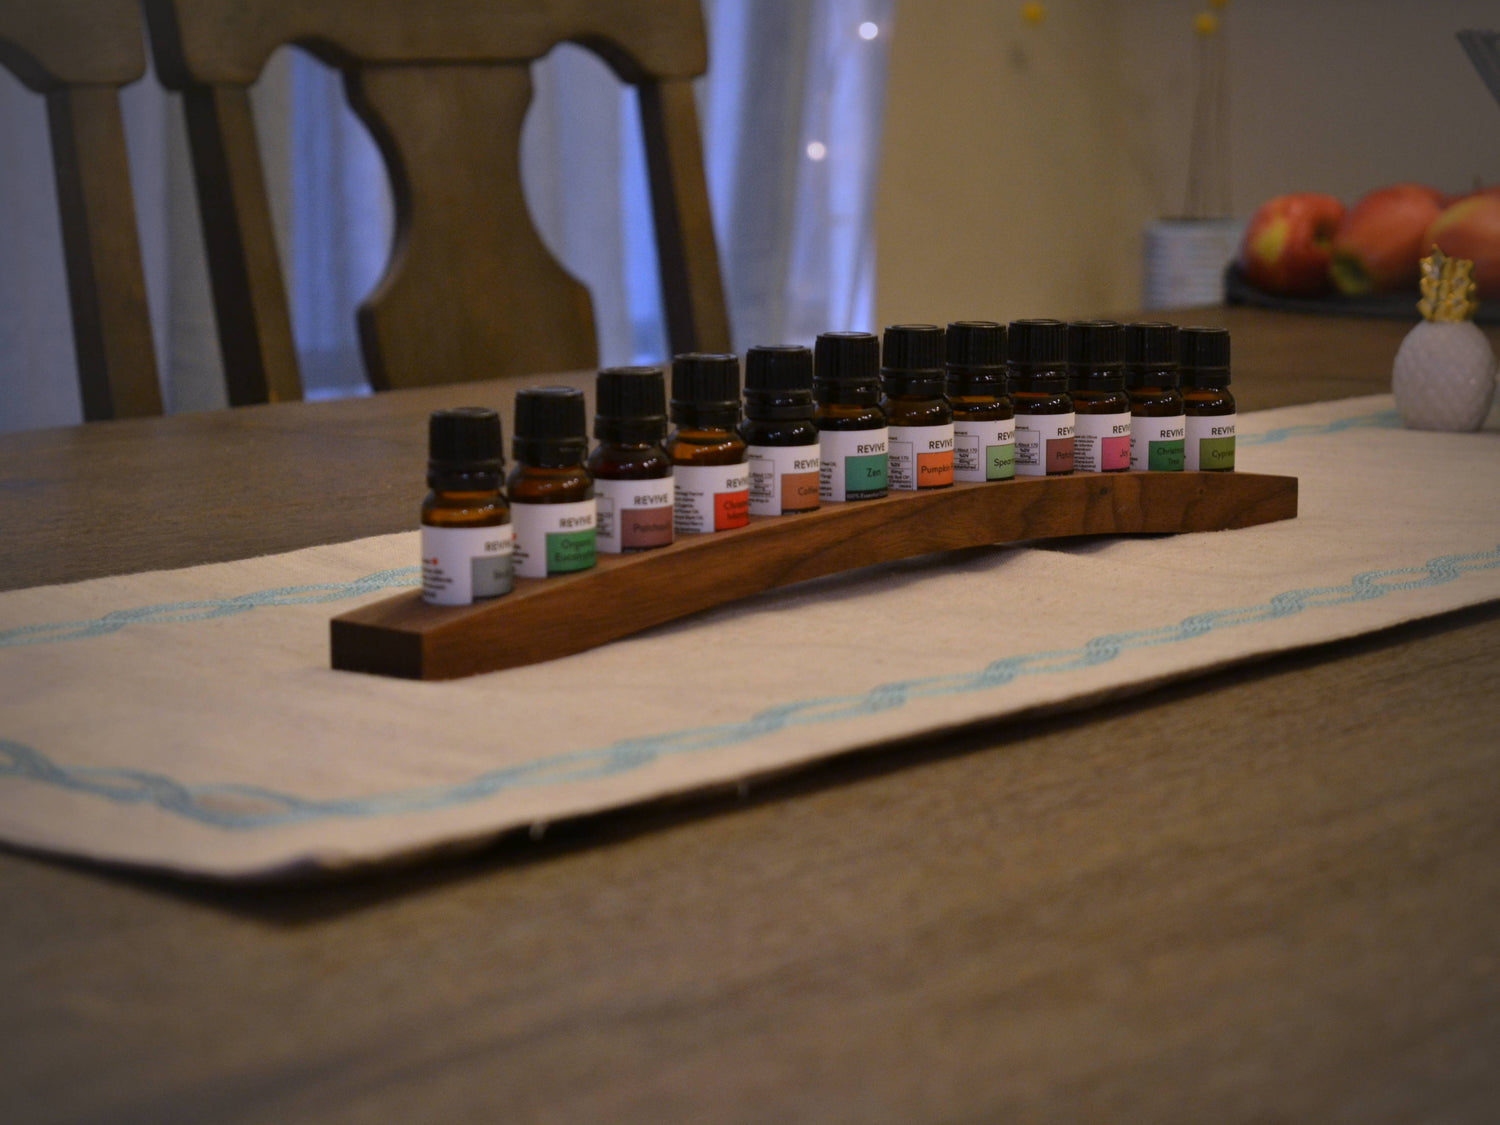 12 bottle essential oil rack on table